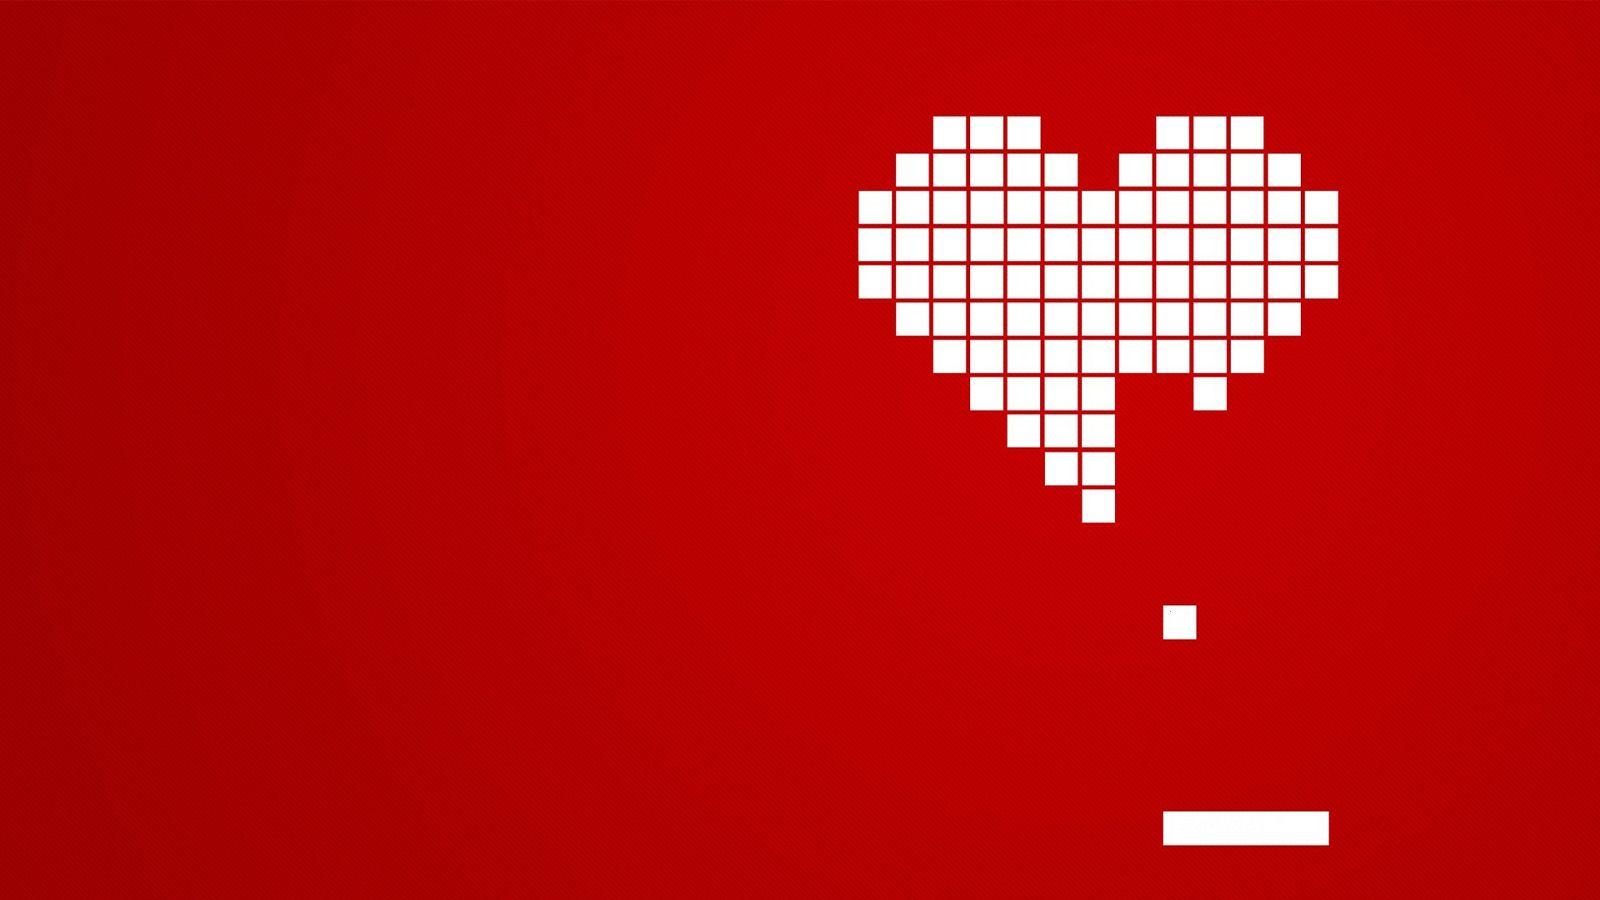 Retro desktop wallpaper pixel heart Pong style. Gaming wallpaper hd, Wallpaper, Gaming wallpaper